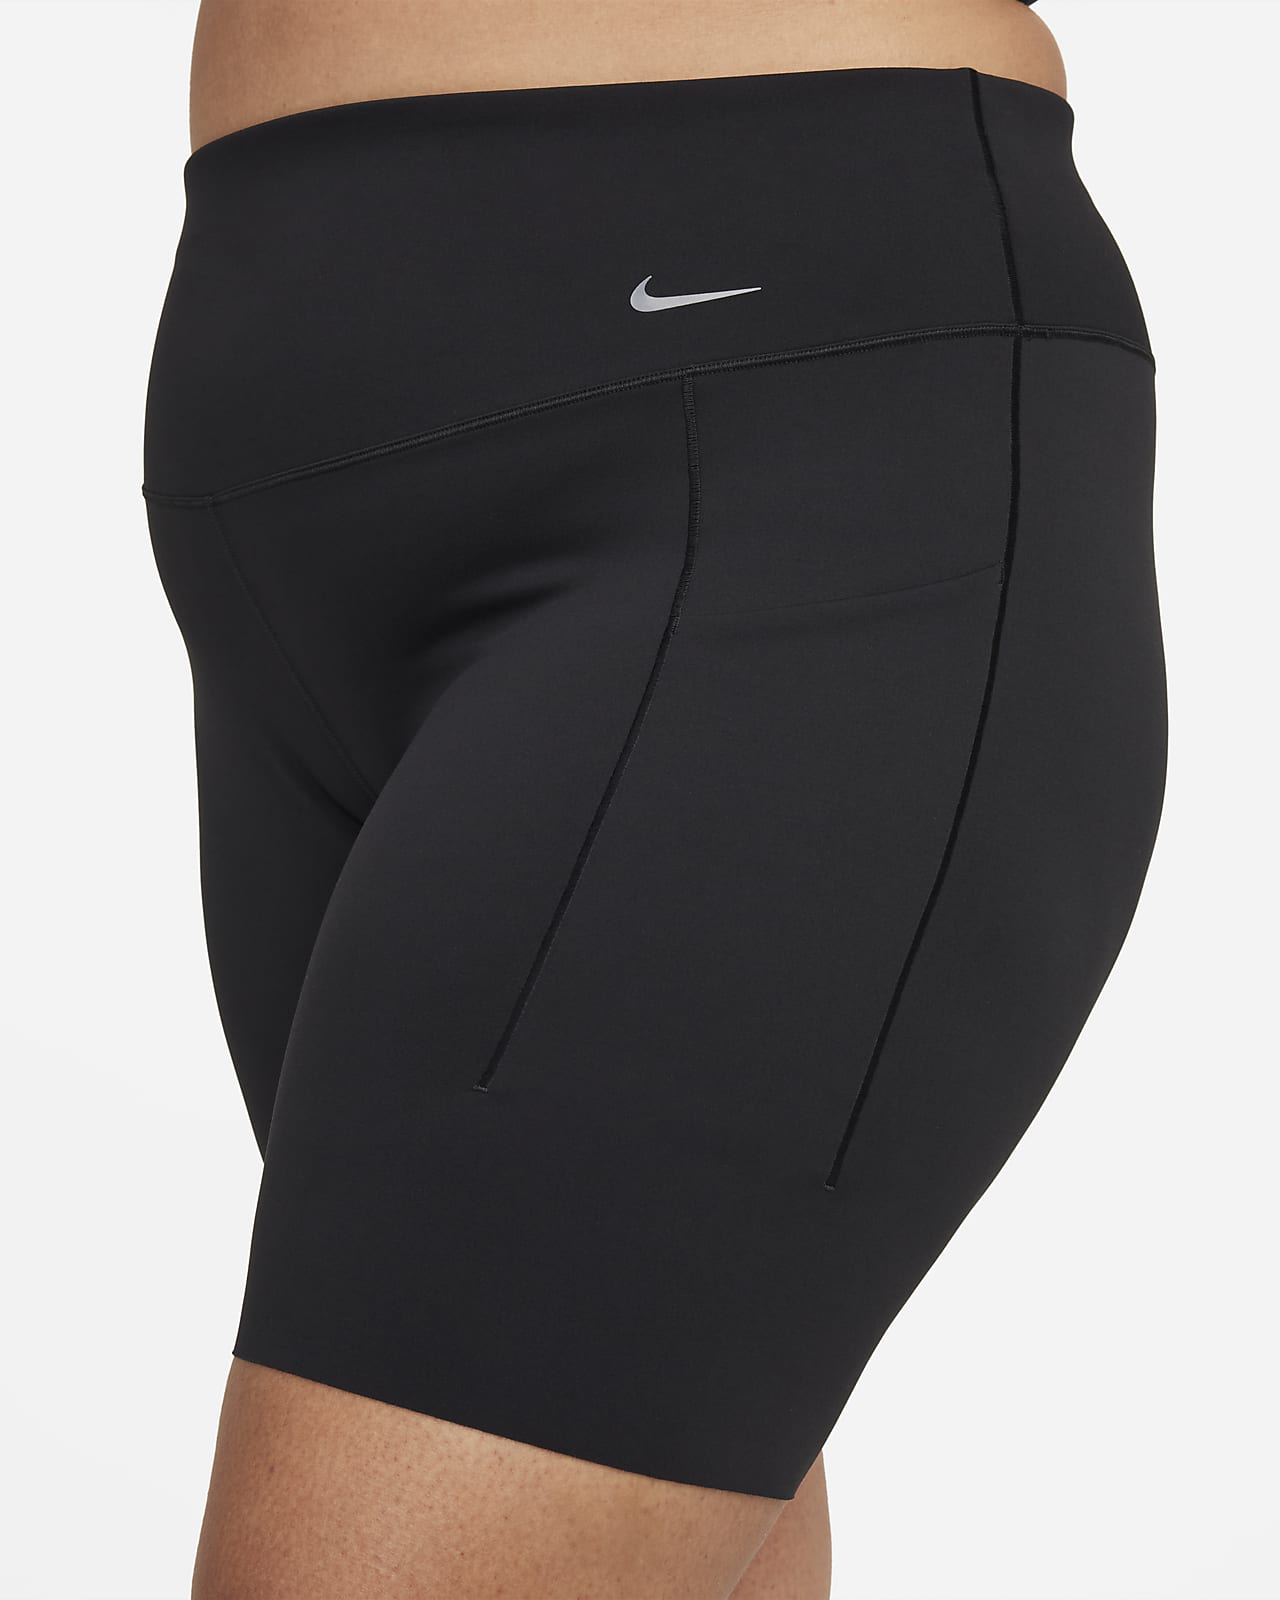 Custom Nike Women's Infiknit Shorts with Pockets